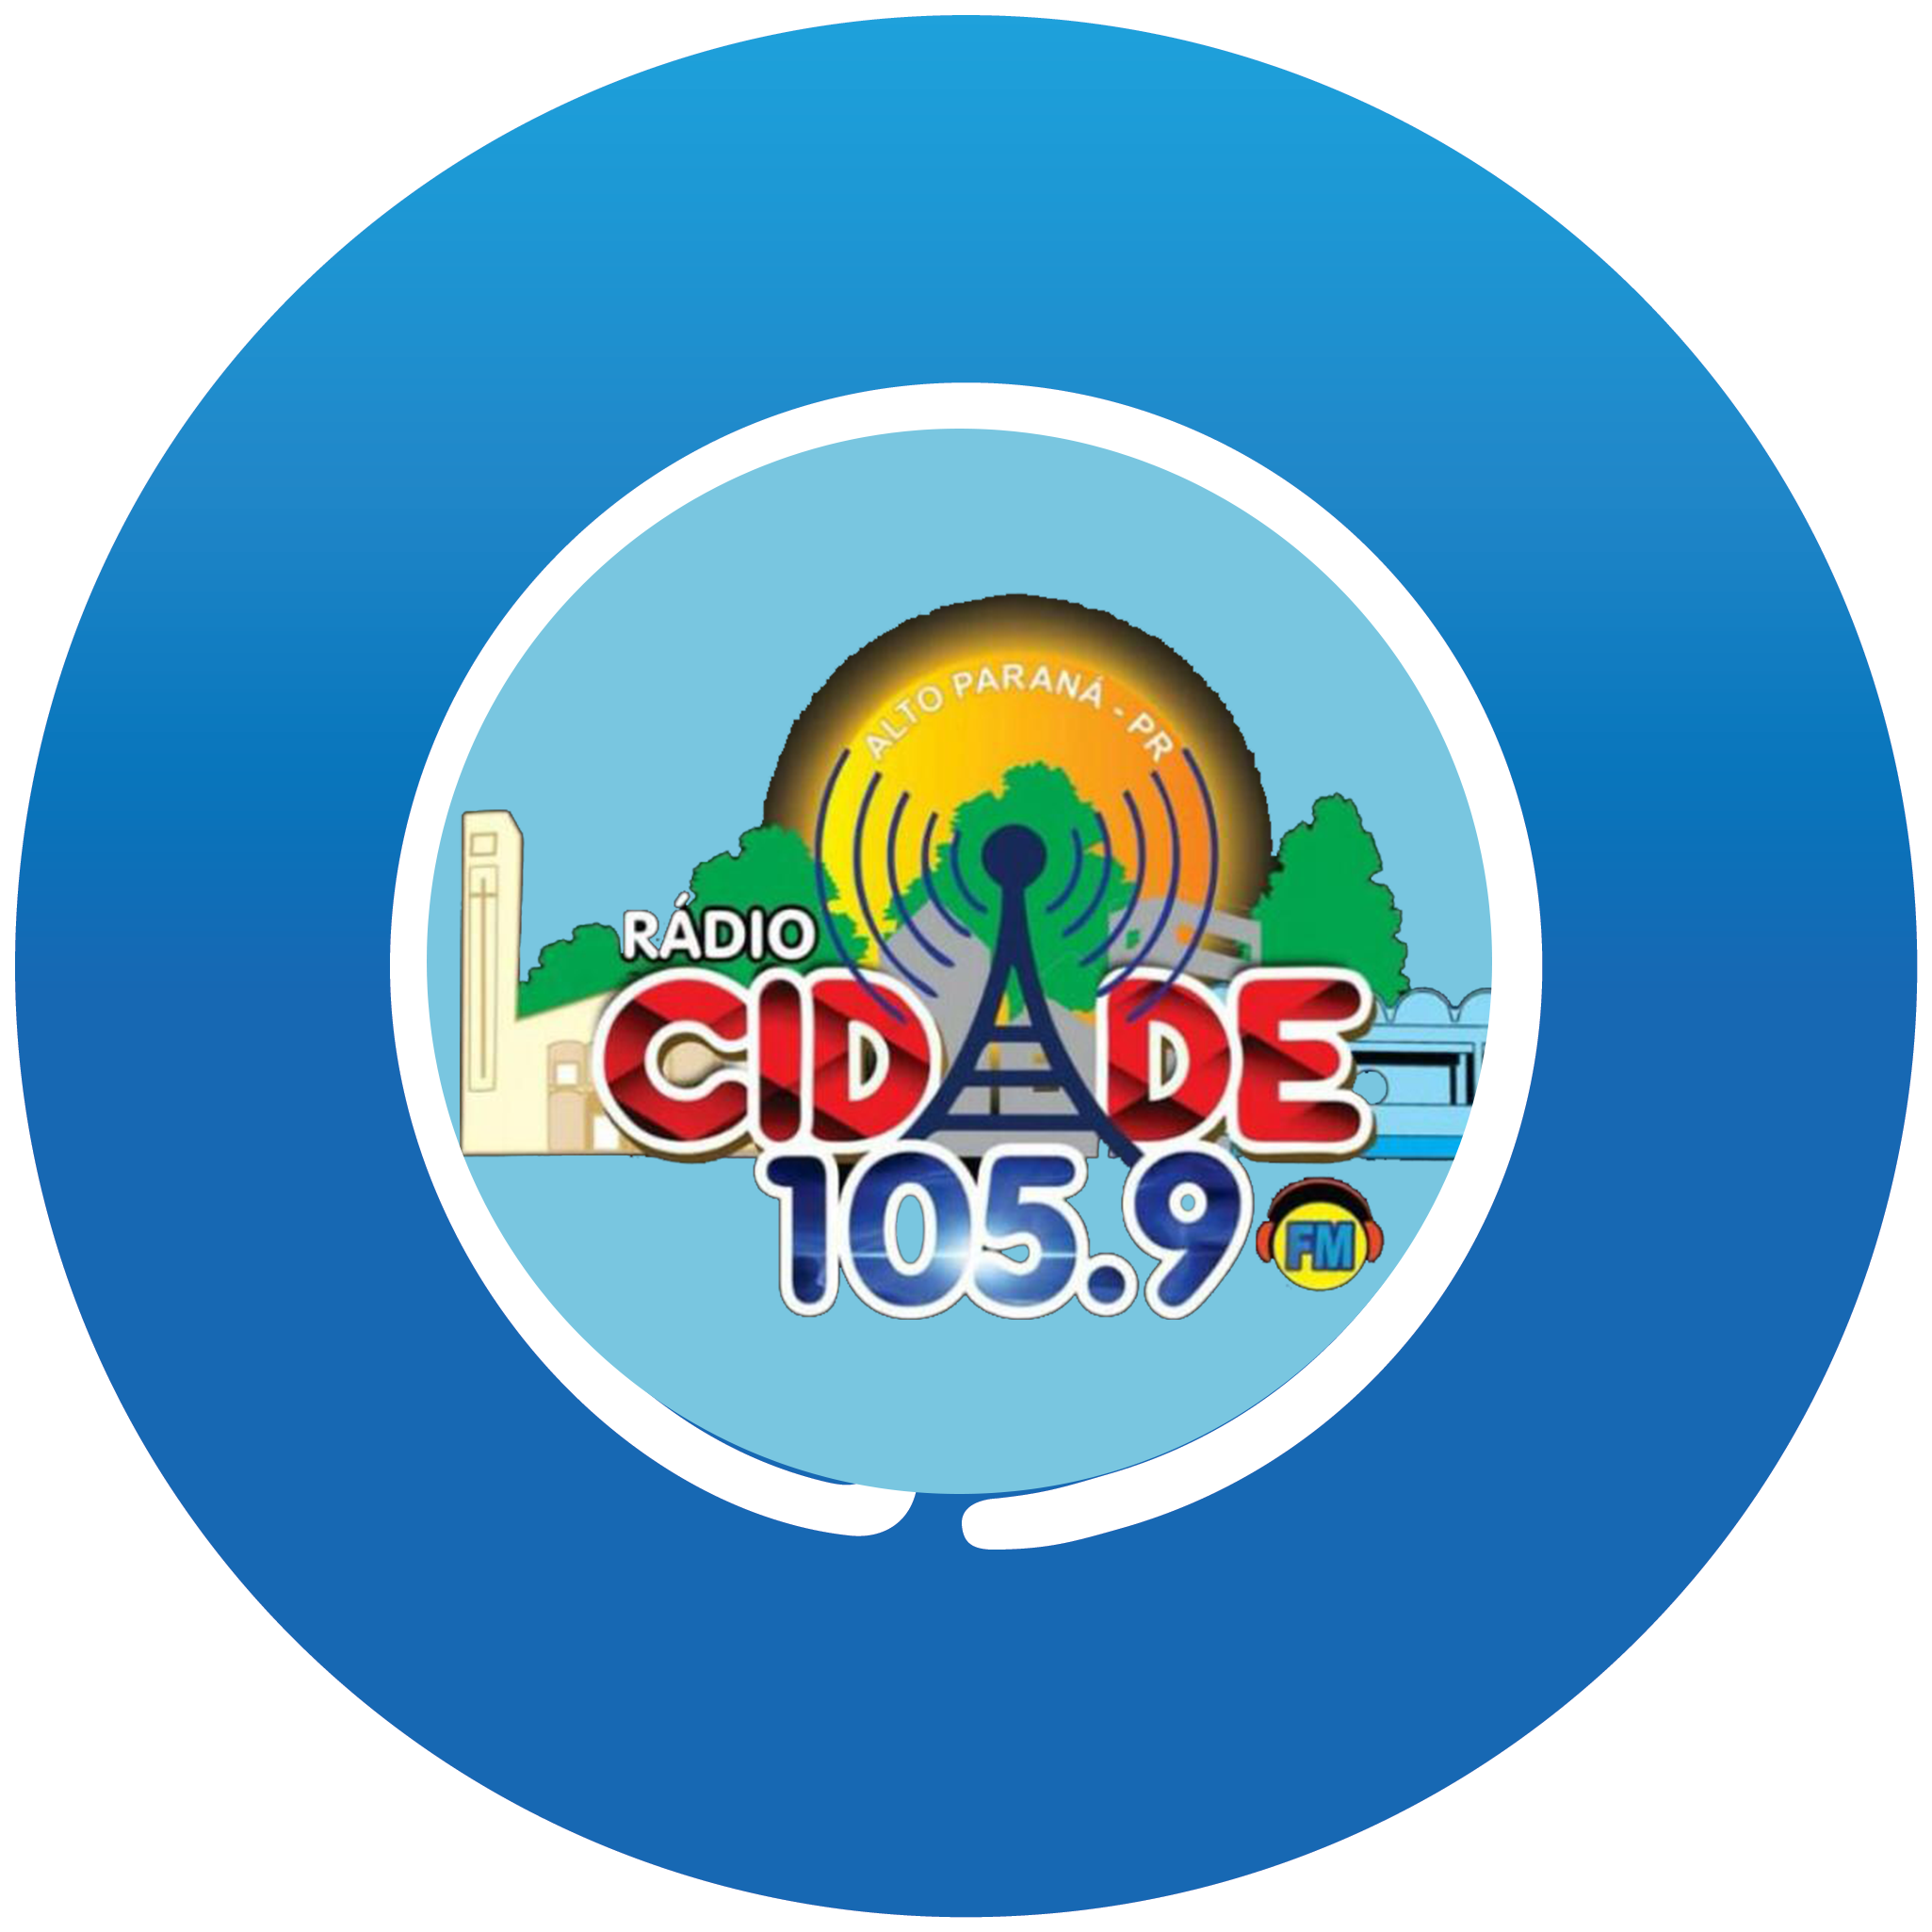 RADIO CIDADE FM 105,9 FM